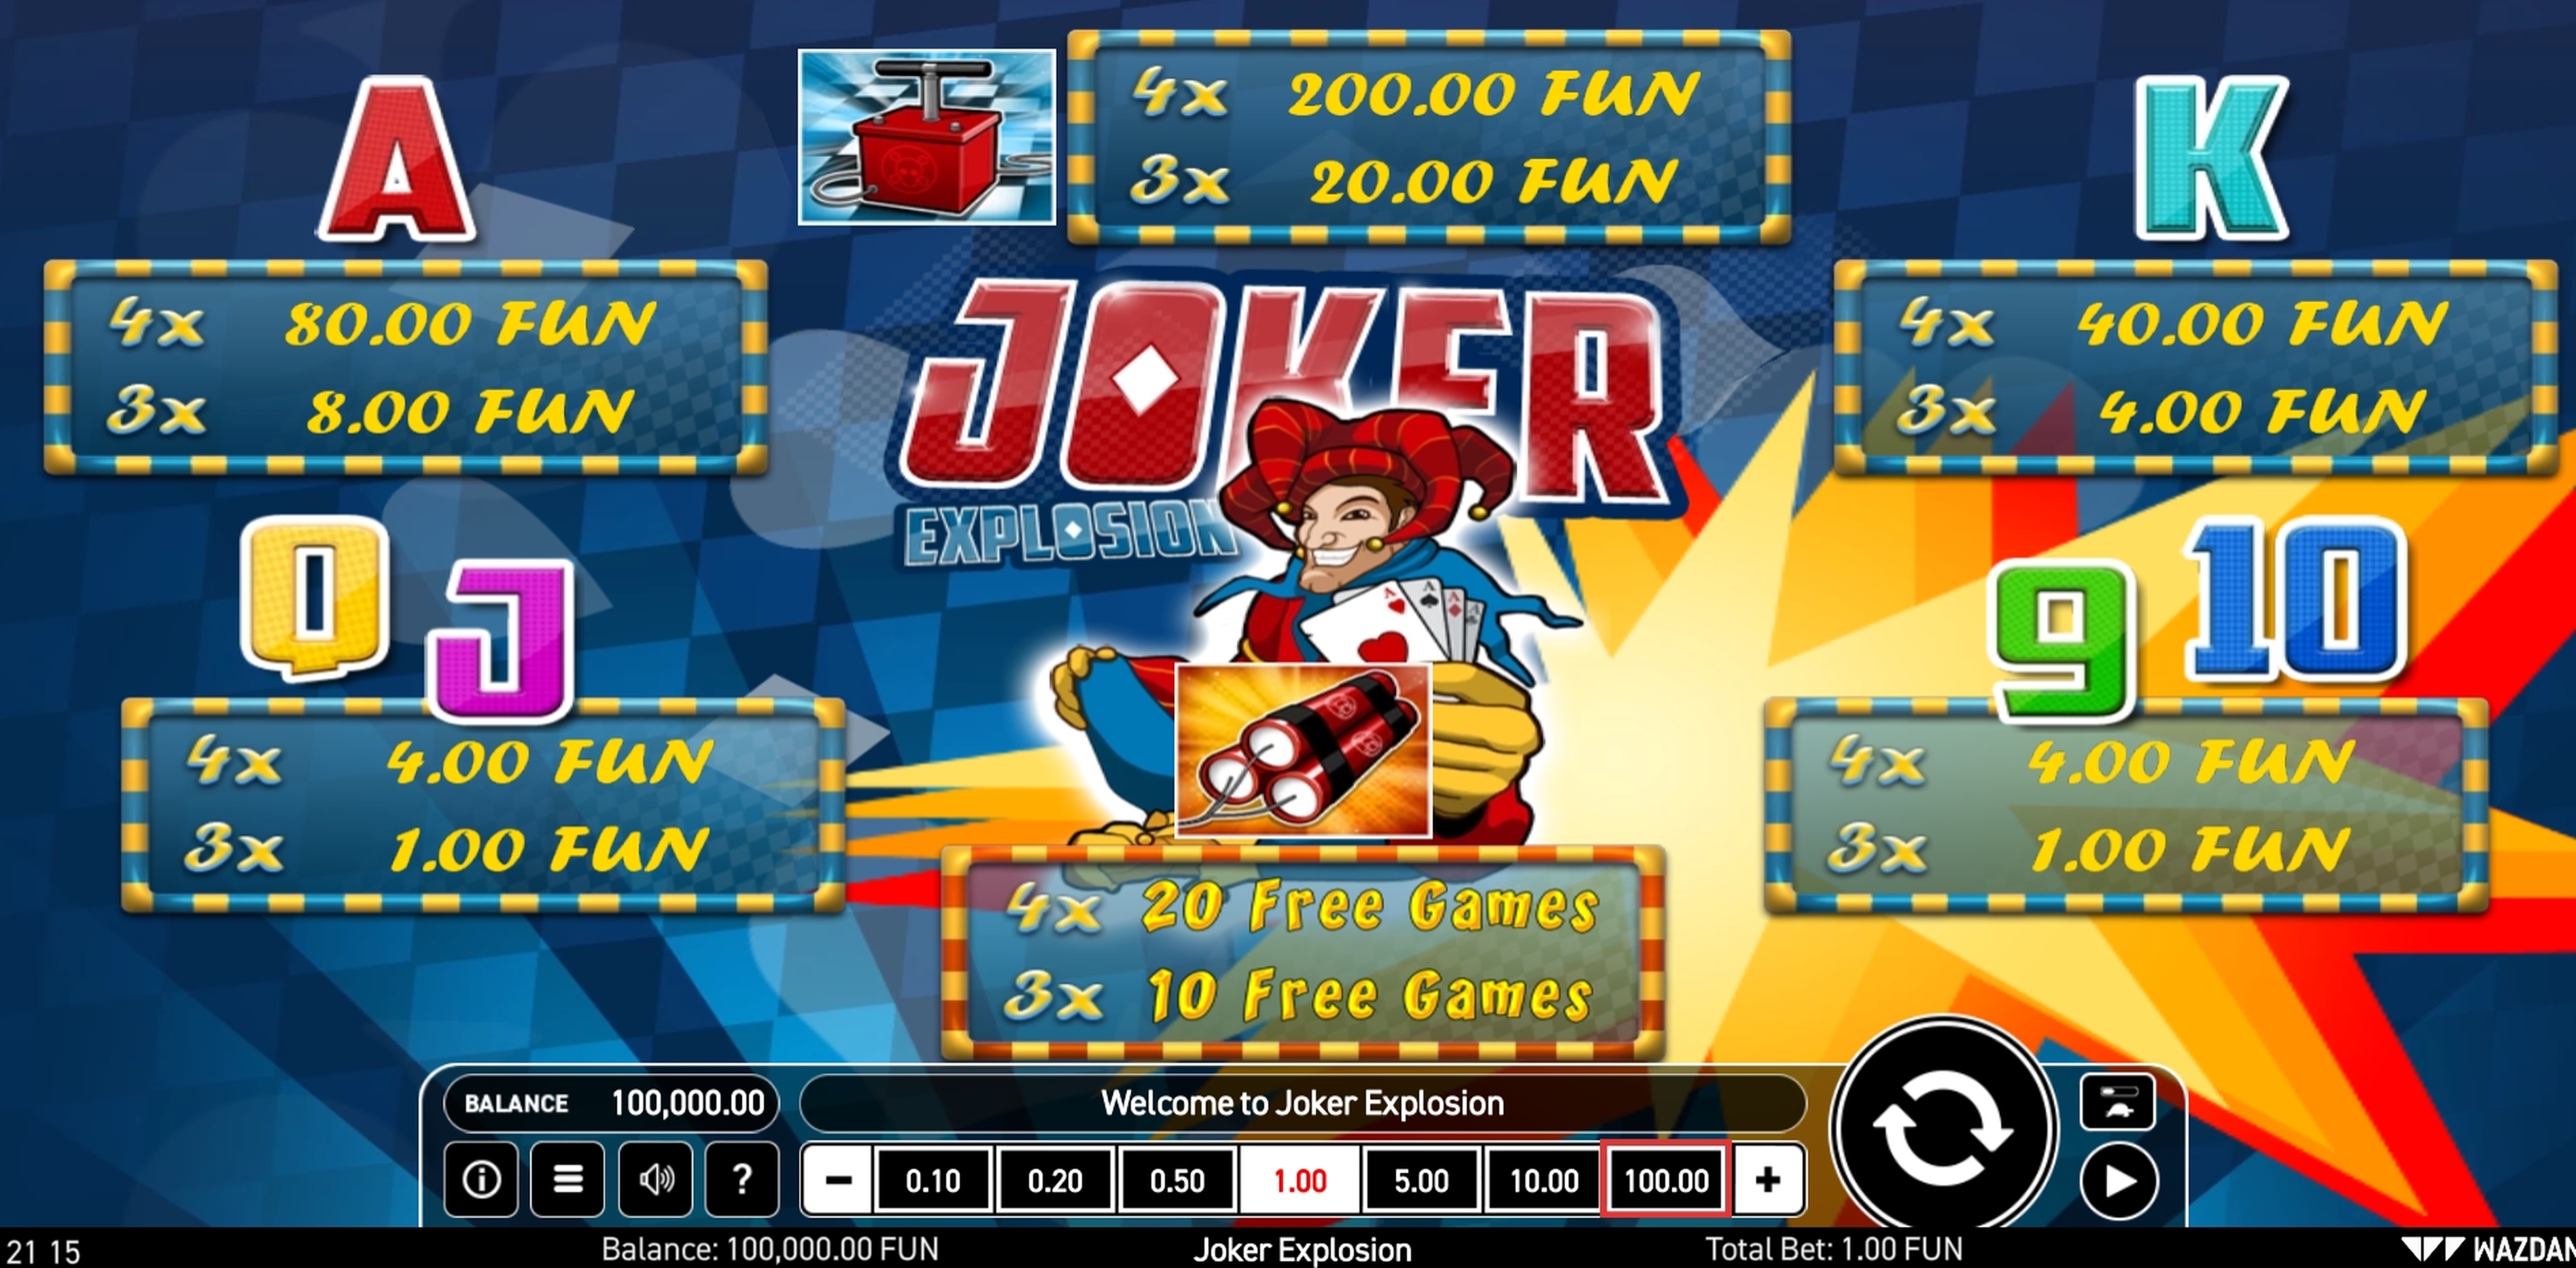 Info of Joker Explosion Slot Game by Wazdan